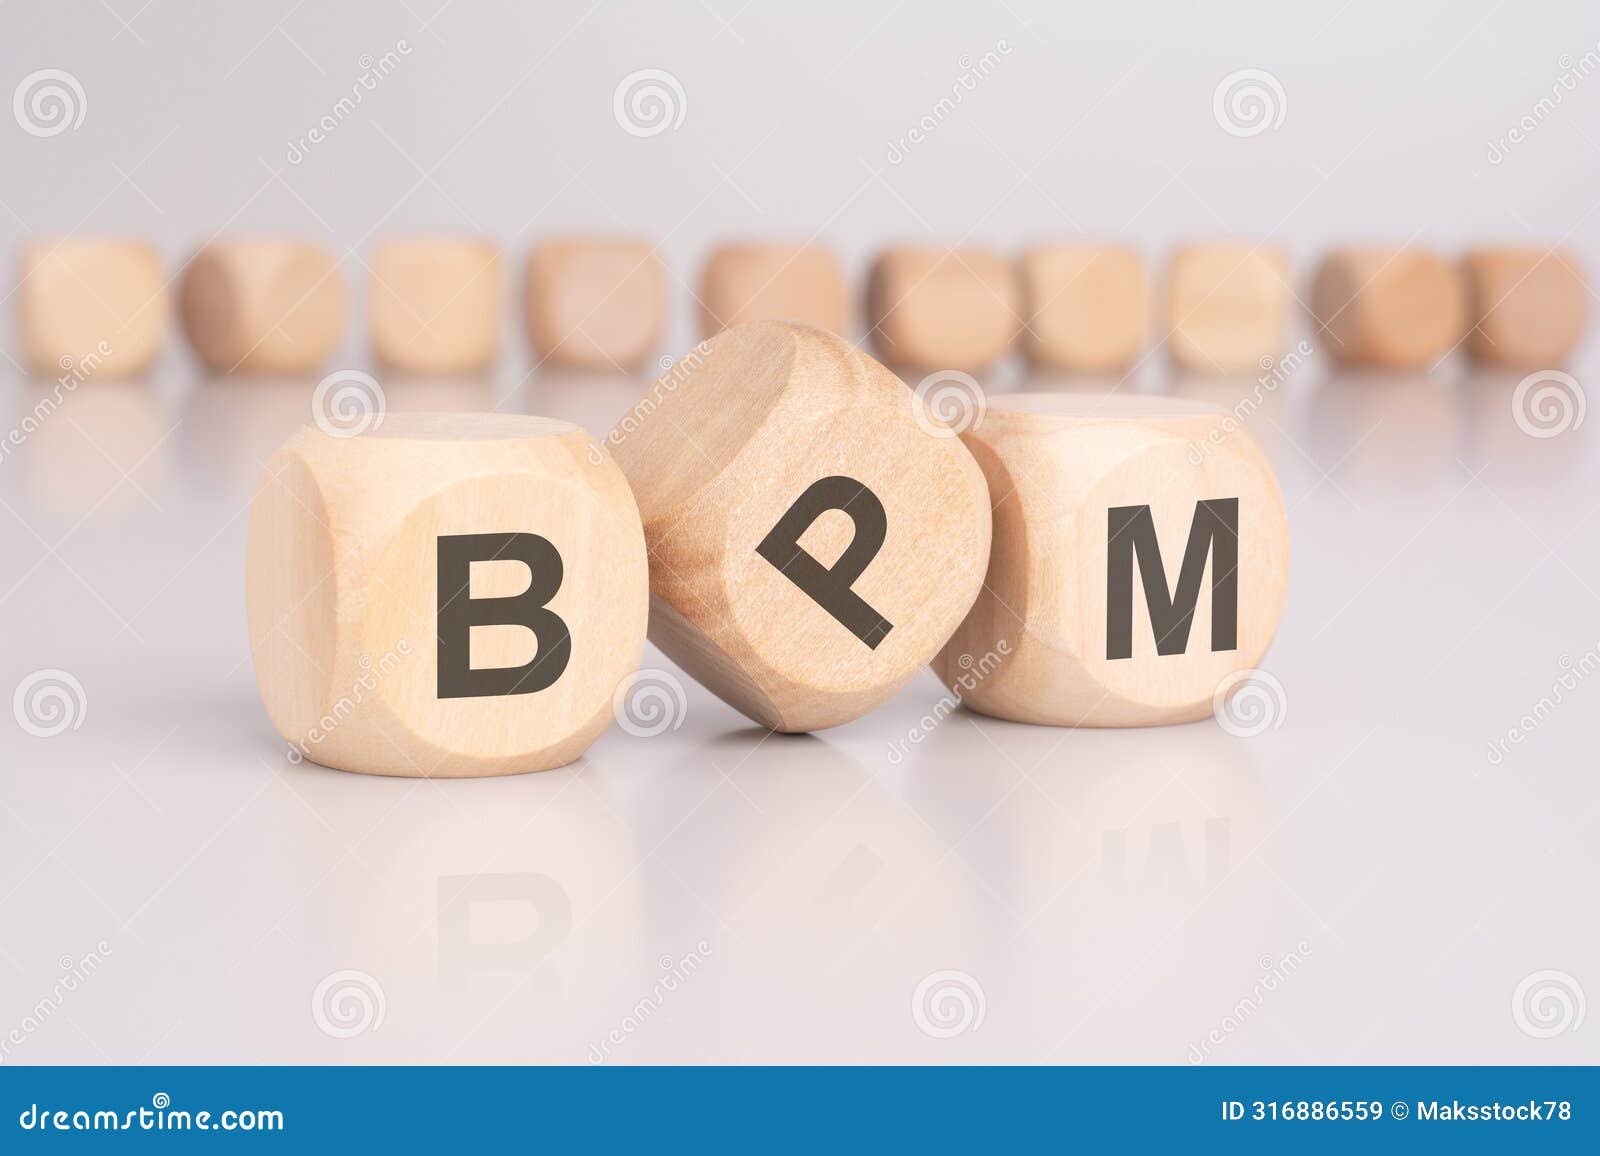 text 'bpm' - business process management - on wooden cubes